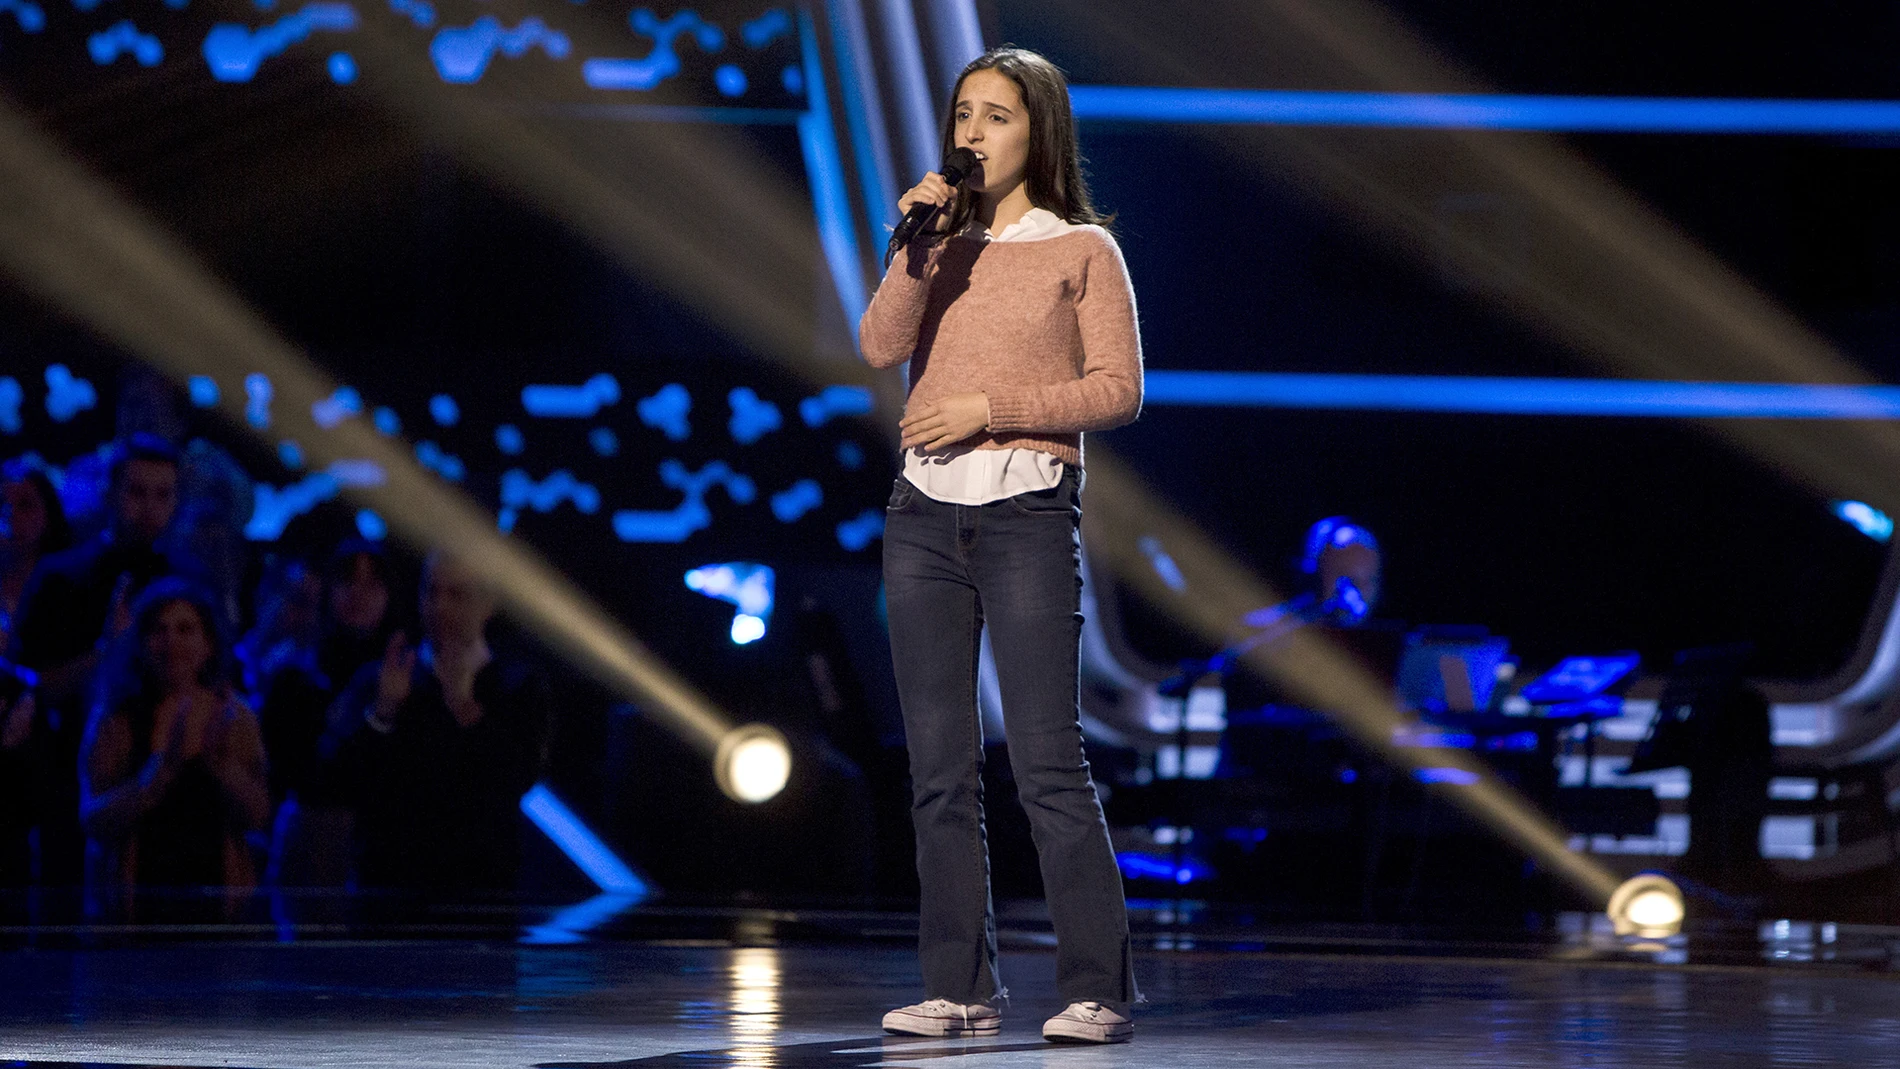 Berta Luna canta ‘The second star to the right’ en las Audiciones a ciegas de ‘La Voz Kids’